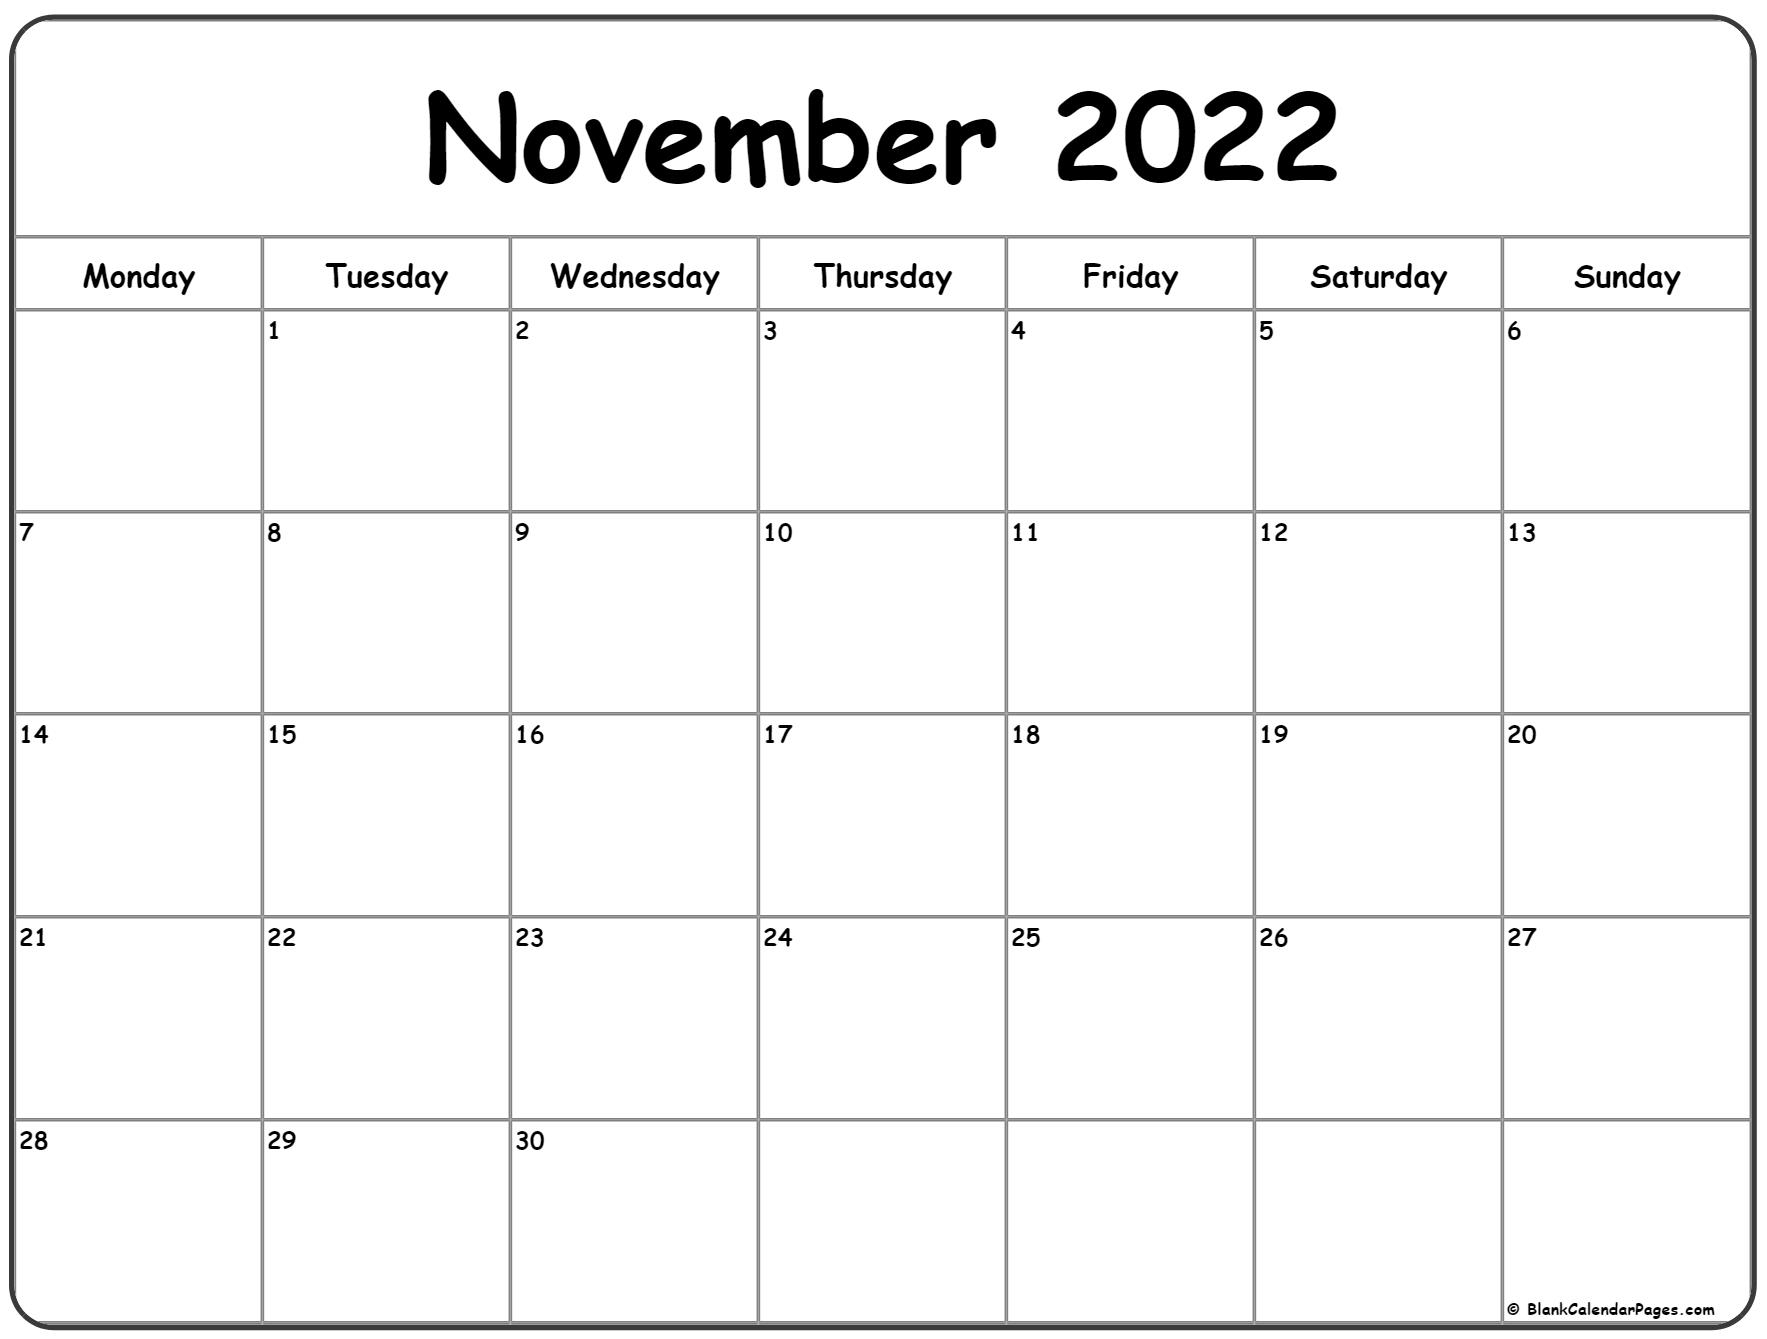 November 2022 Monday Calendar | Monday To Sunday